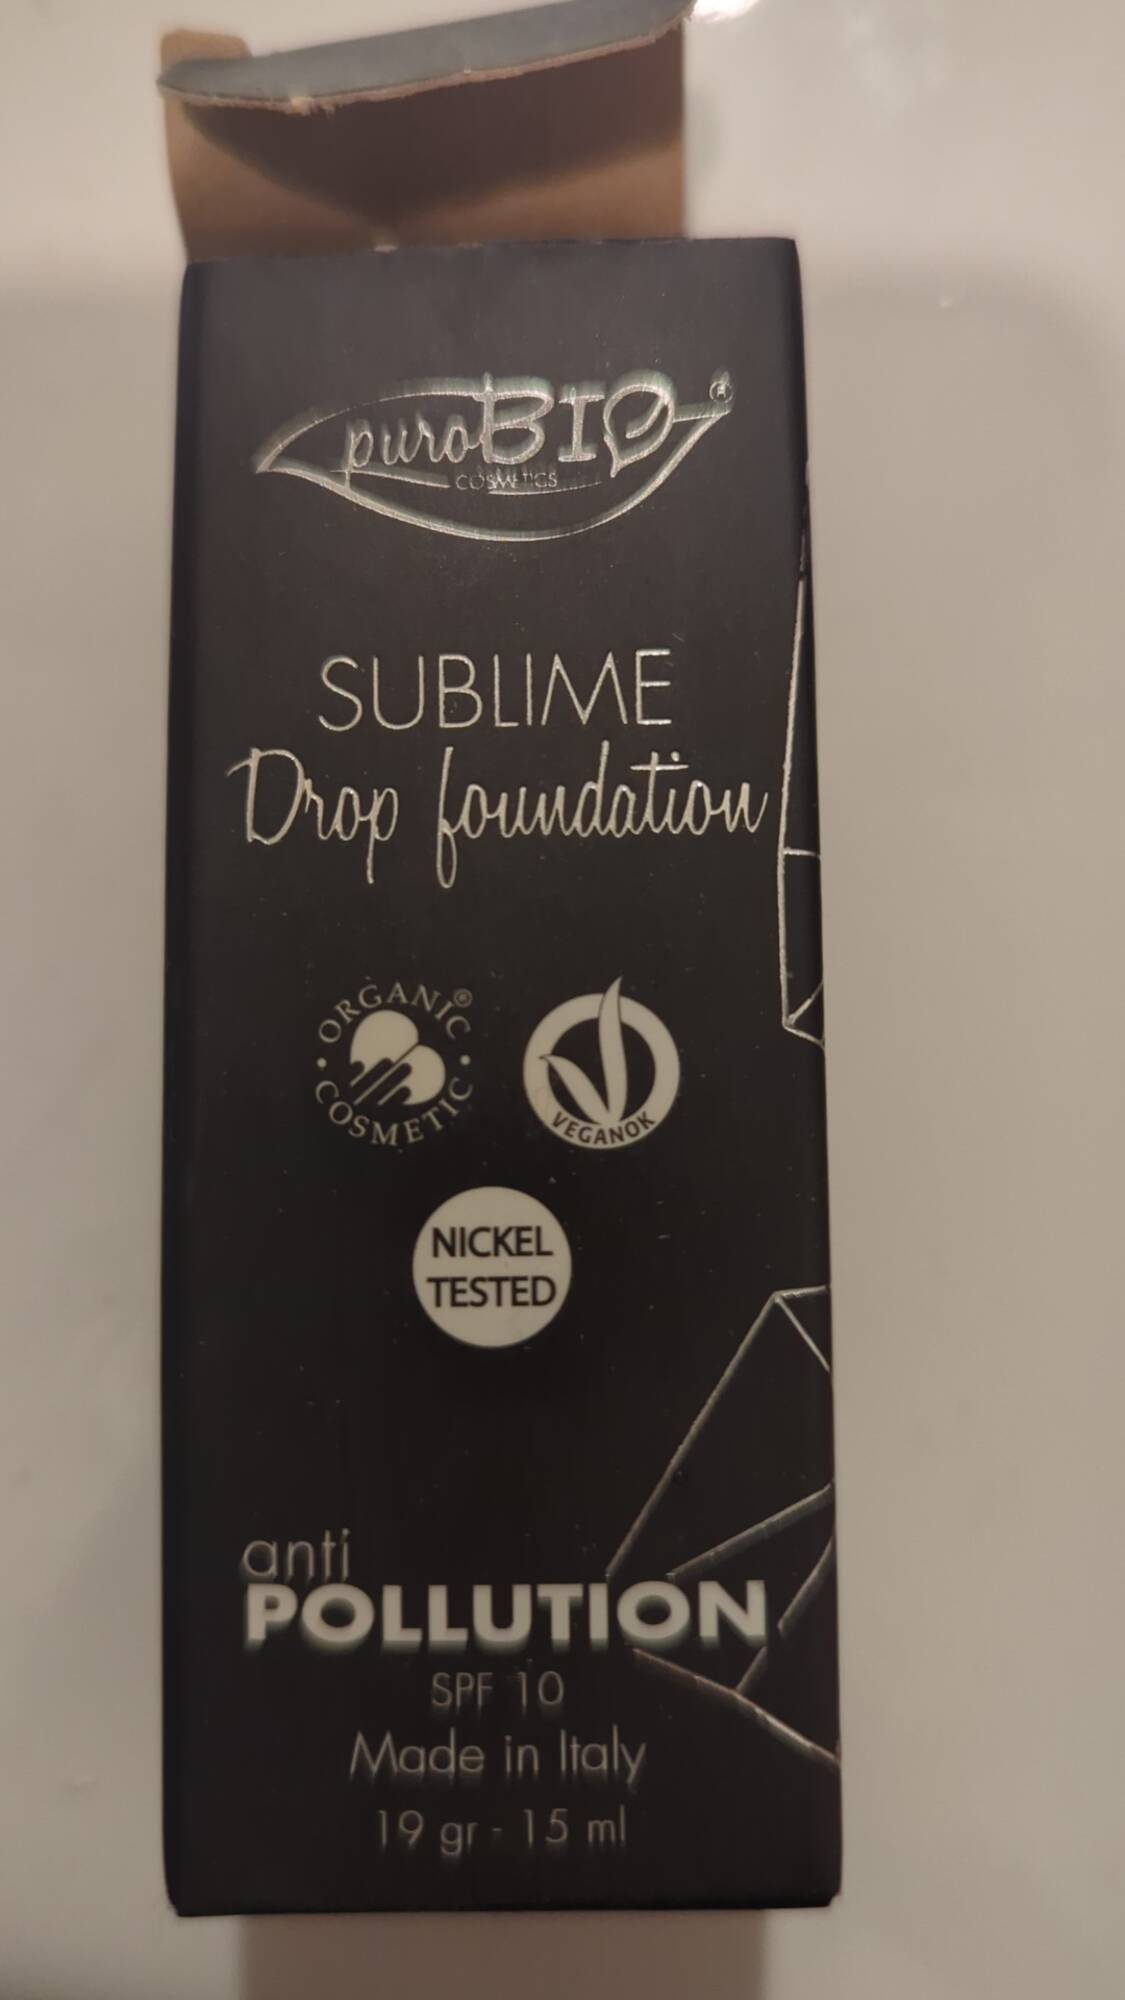 PUROBIO - Anti pollution - Sublime drop foundation